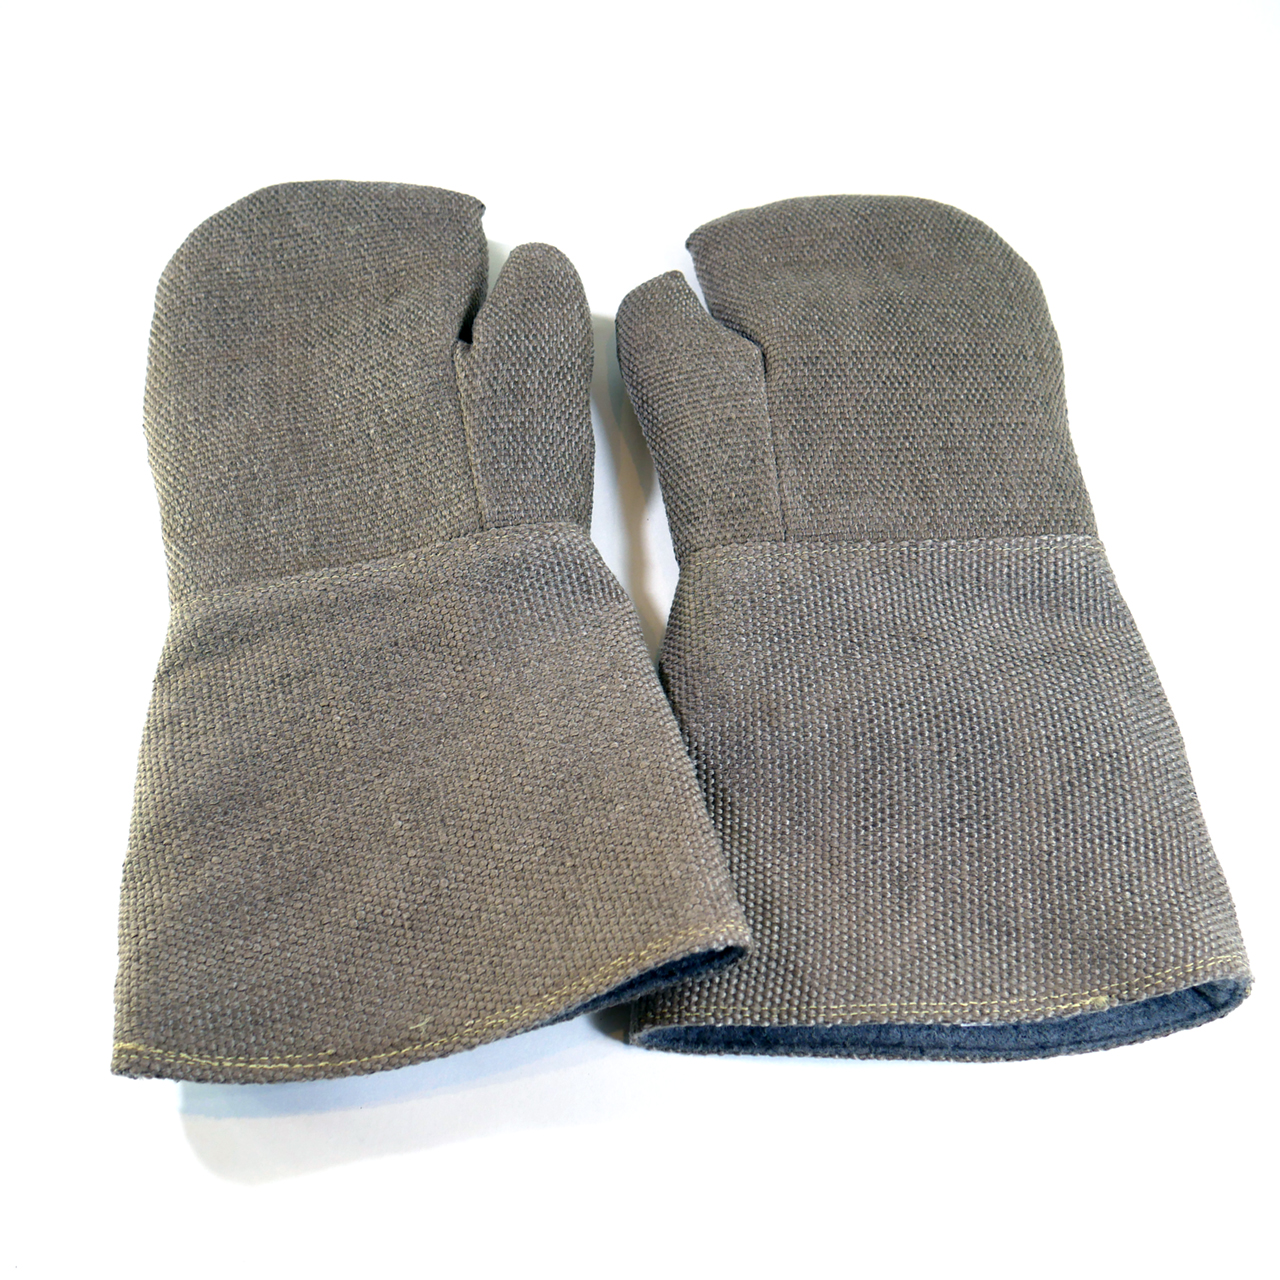 Fist glove JUTEC for 900°C contact heat